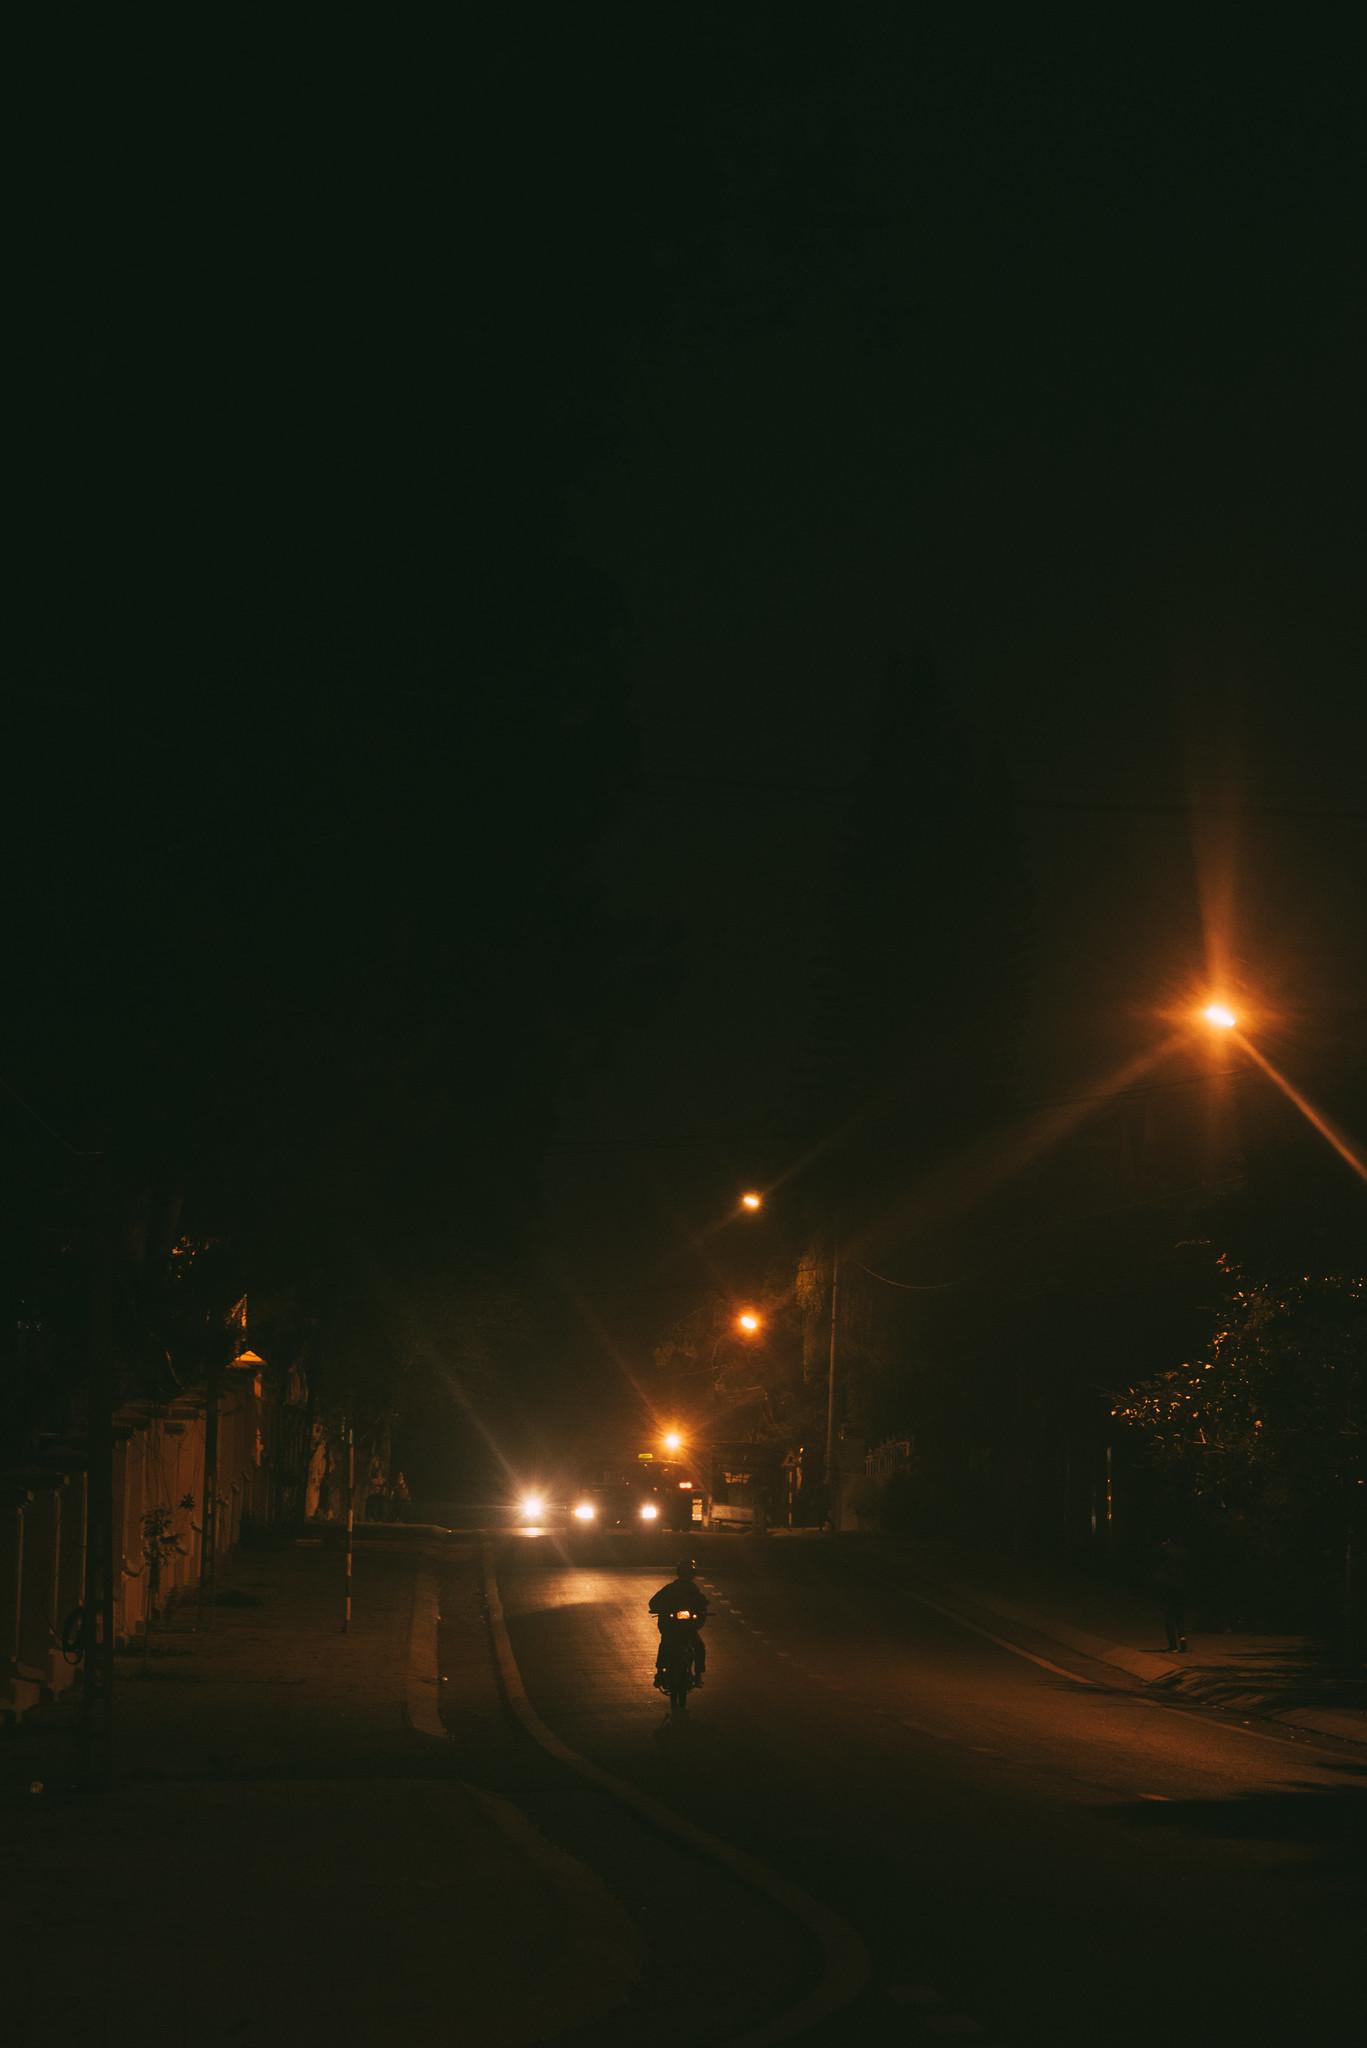 Vehicle Light in the Dark